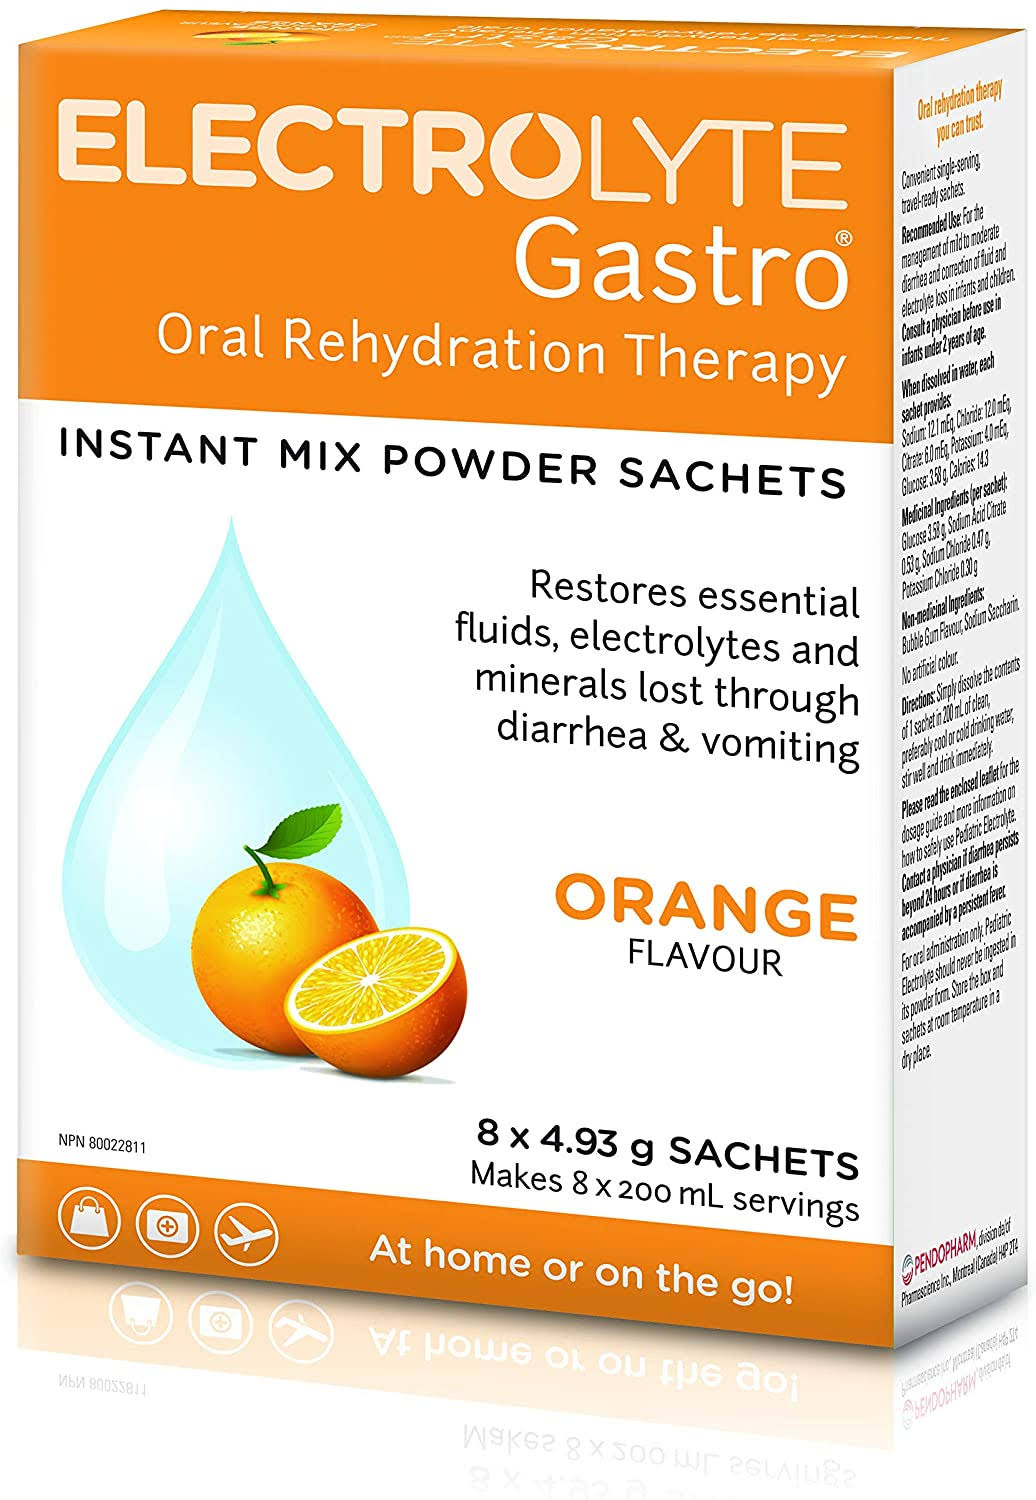 Electrolyte Gastro Orange Oral Rehydration Therapy